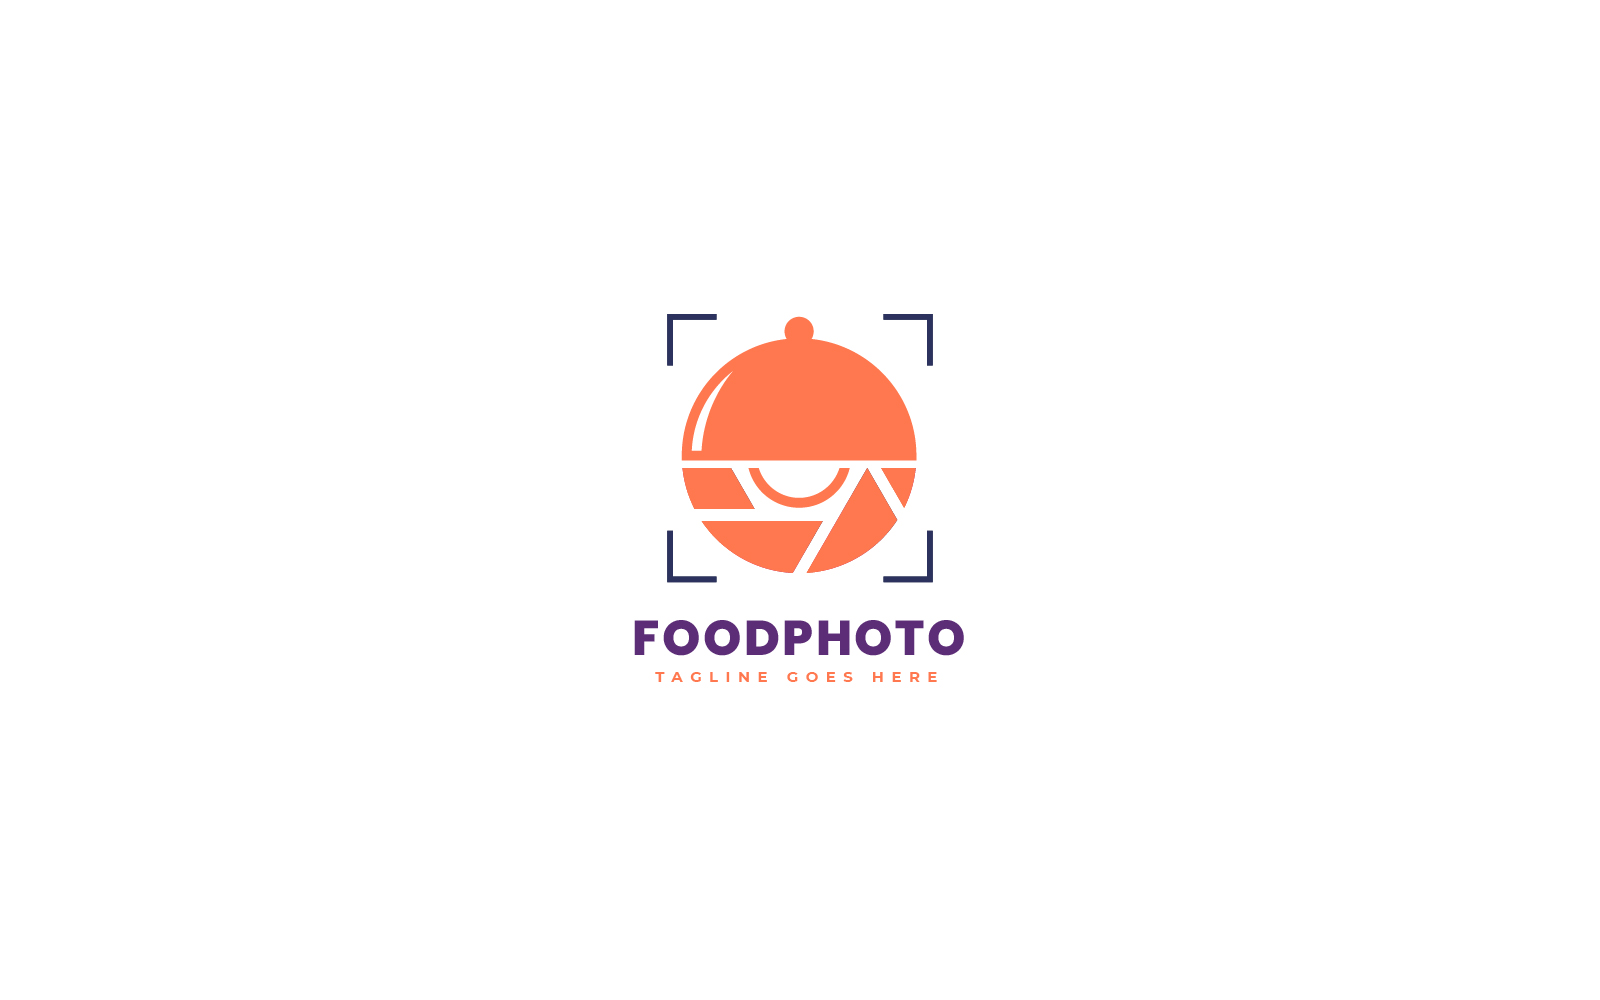 Food Photo App Logo Template in Orange